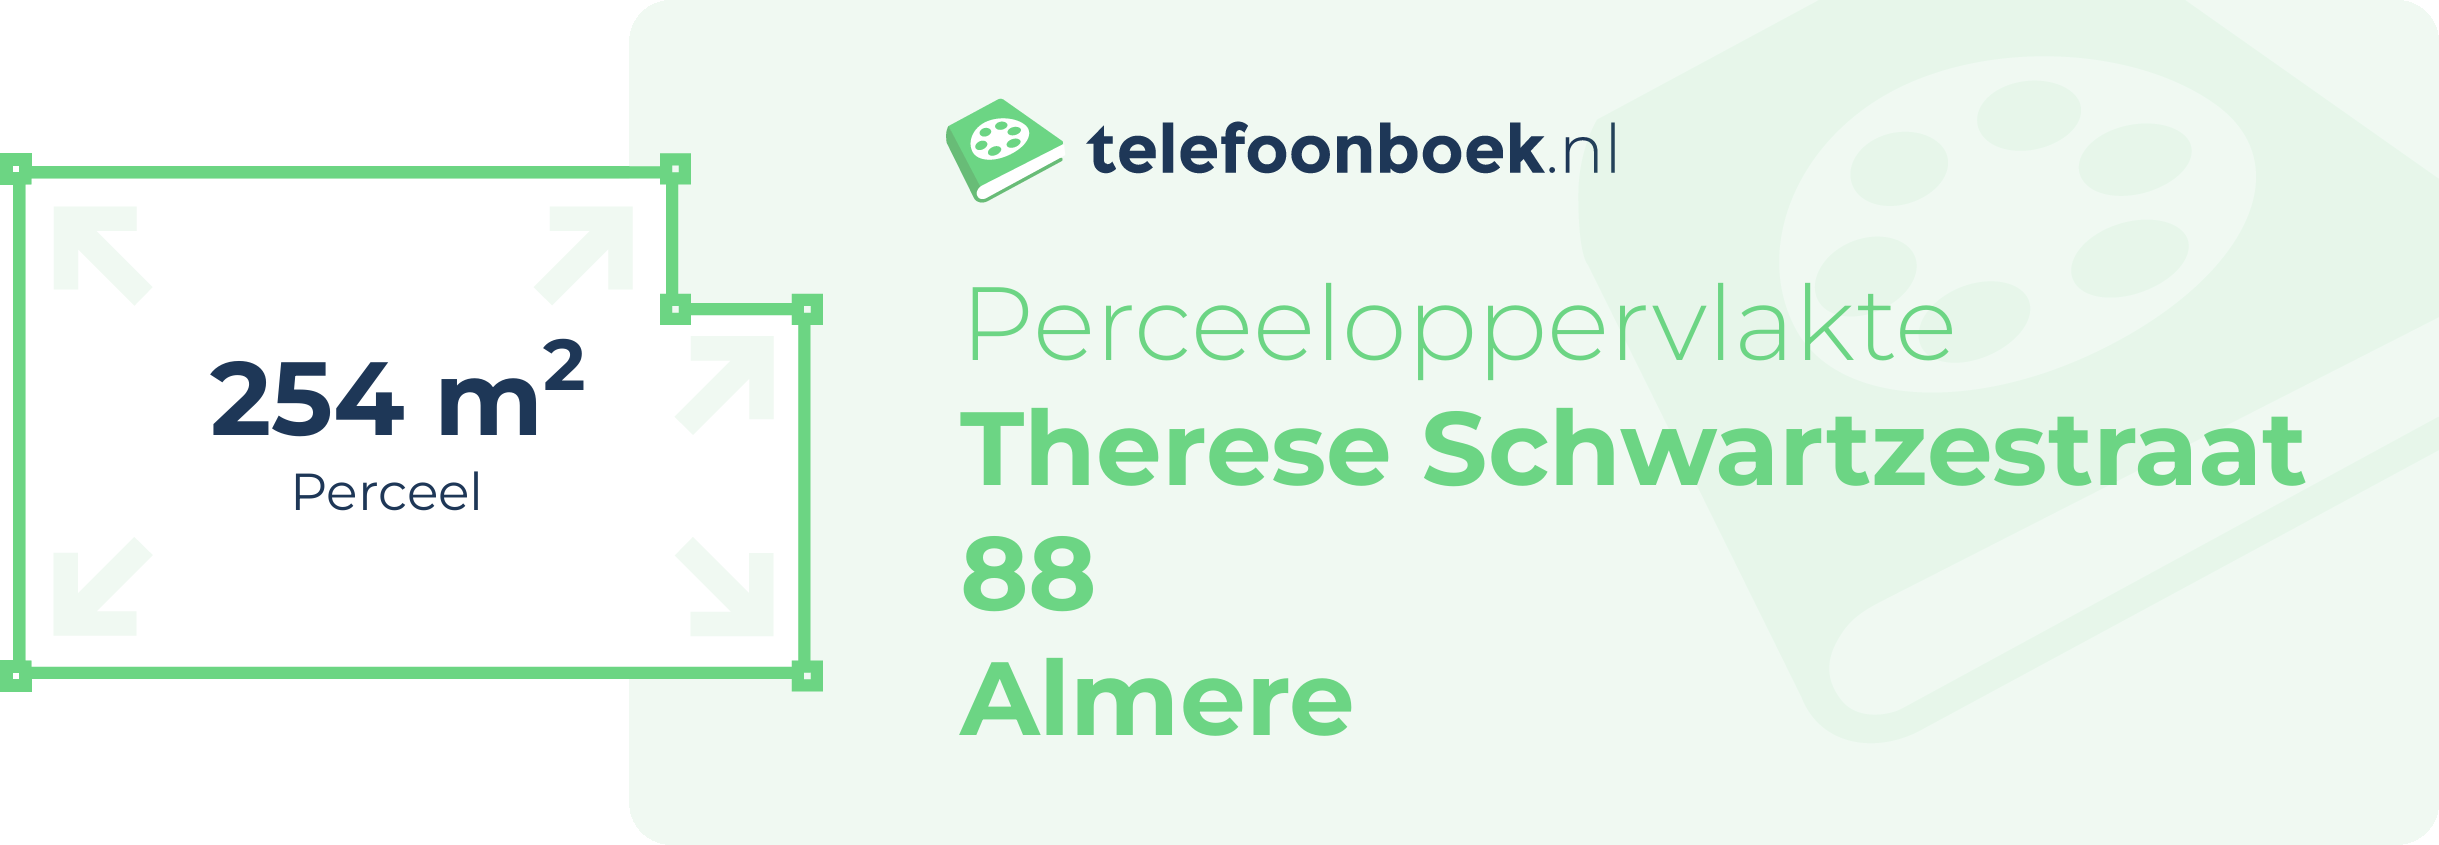 Perceeloppervlakte Therese Schwartzestraat 88 Almere